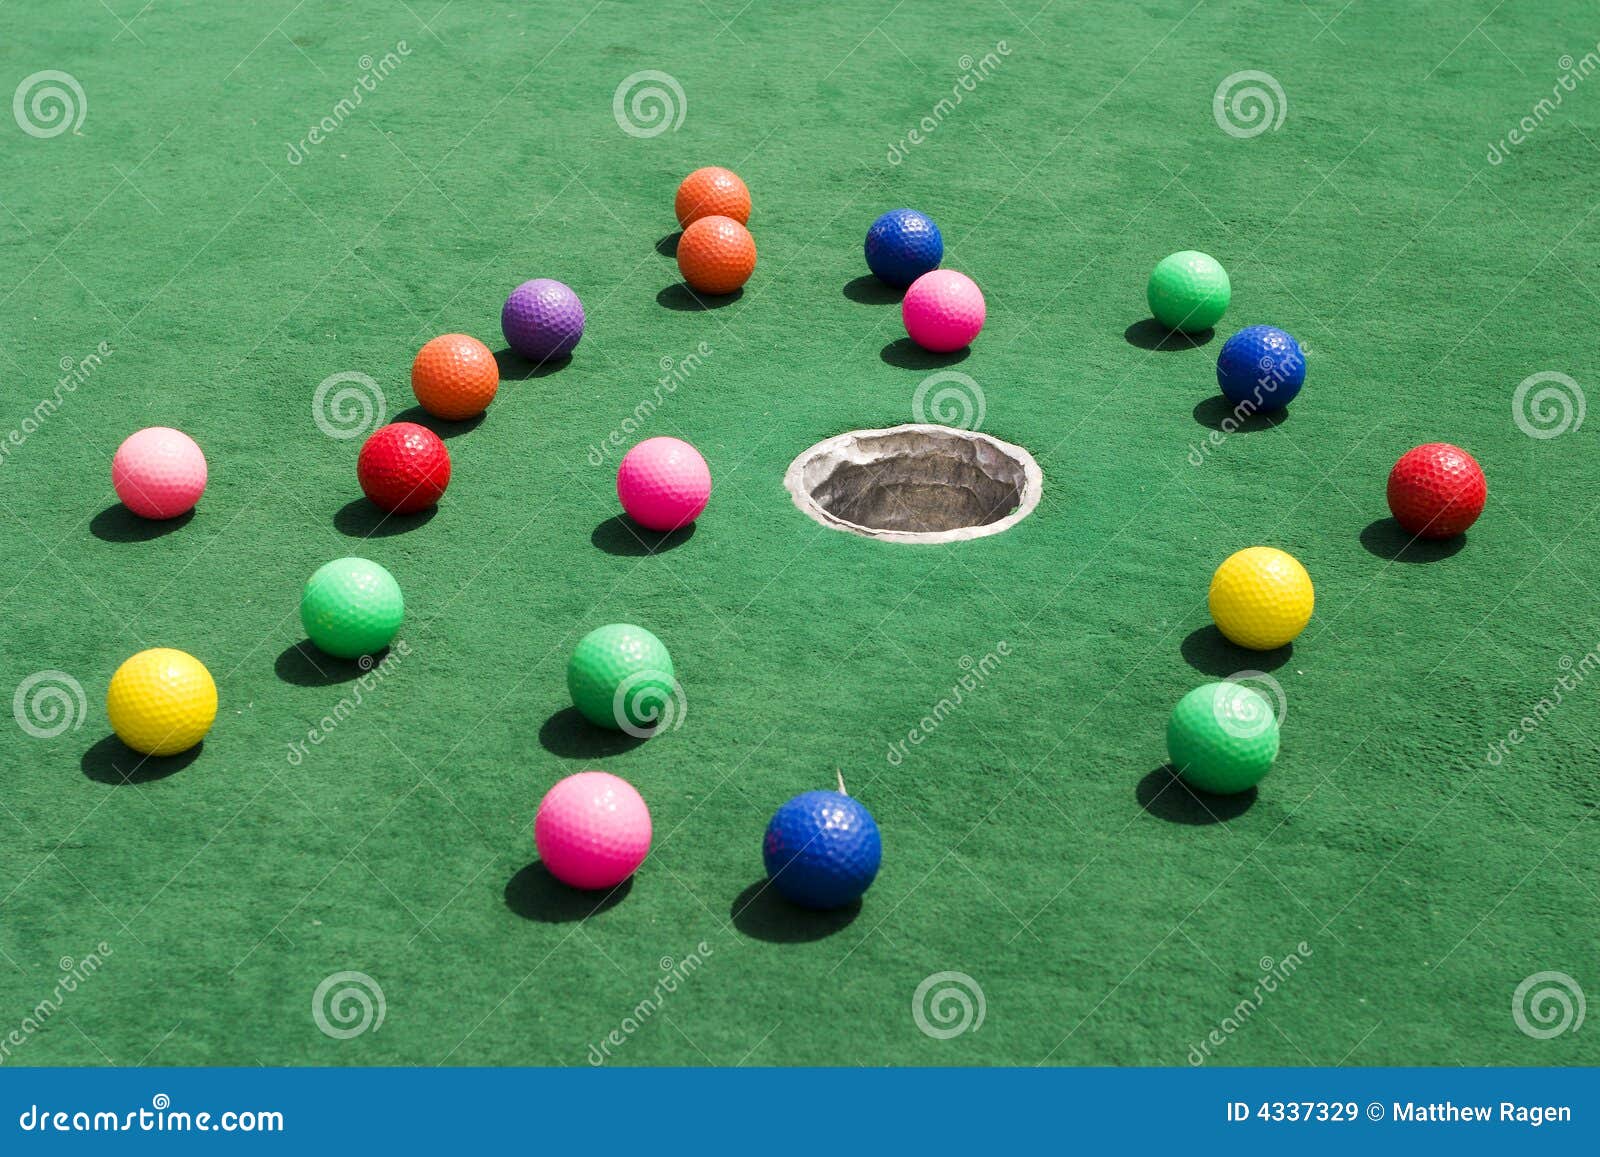 scattered golf balls